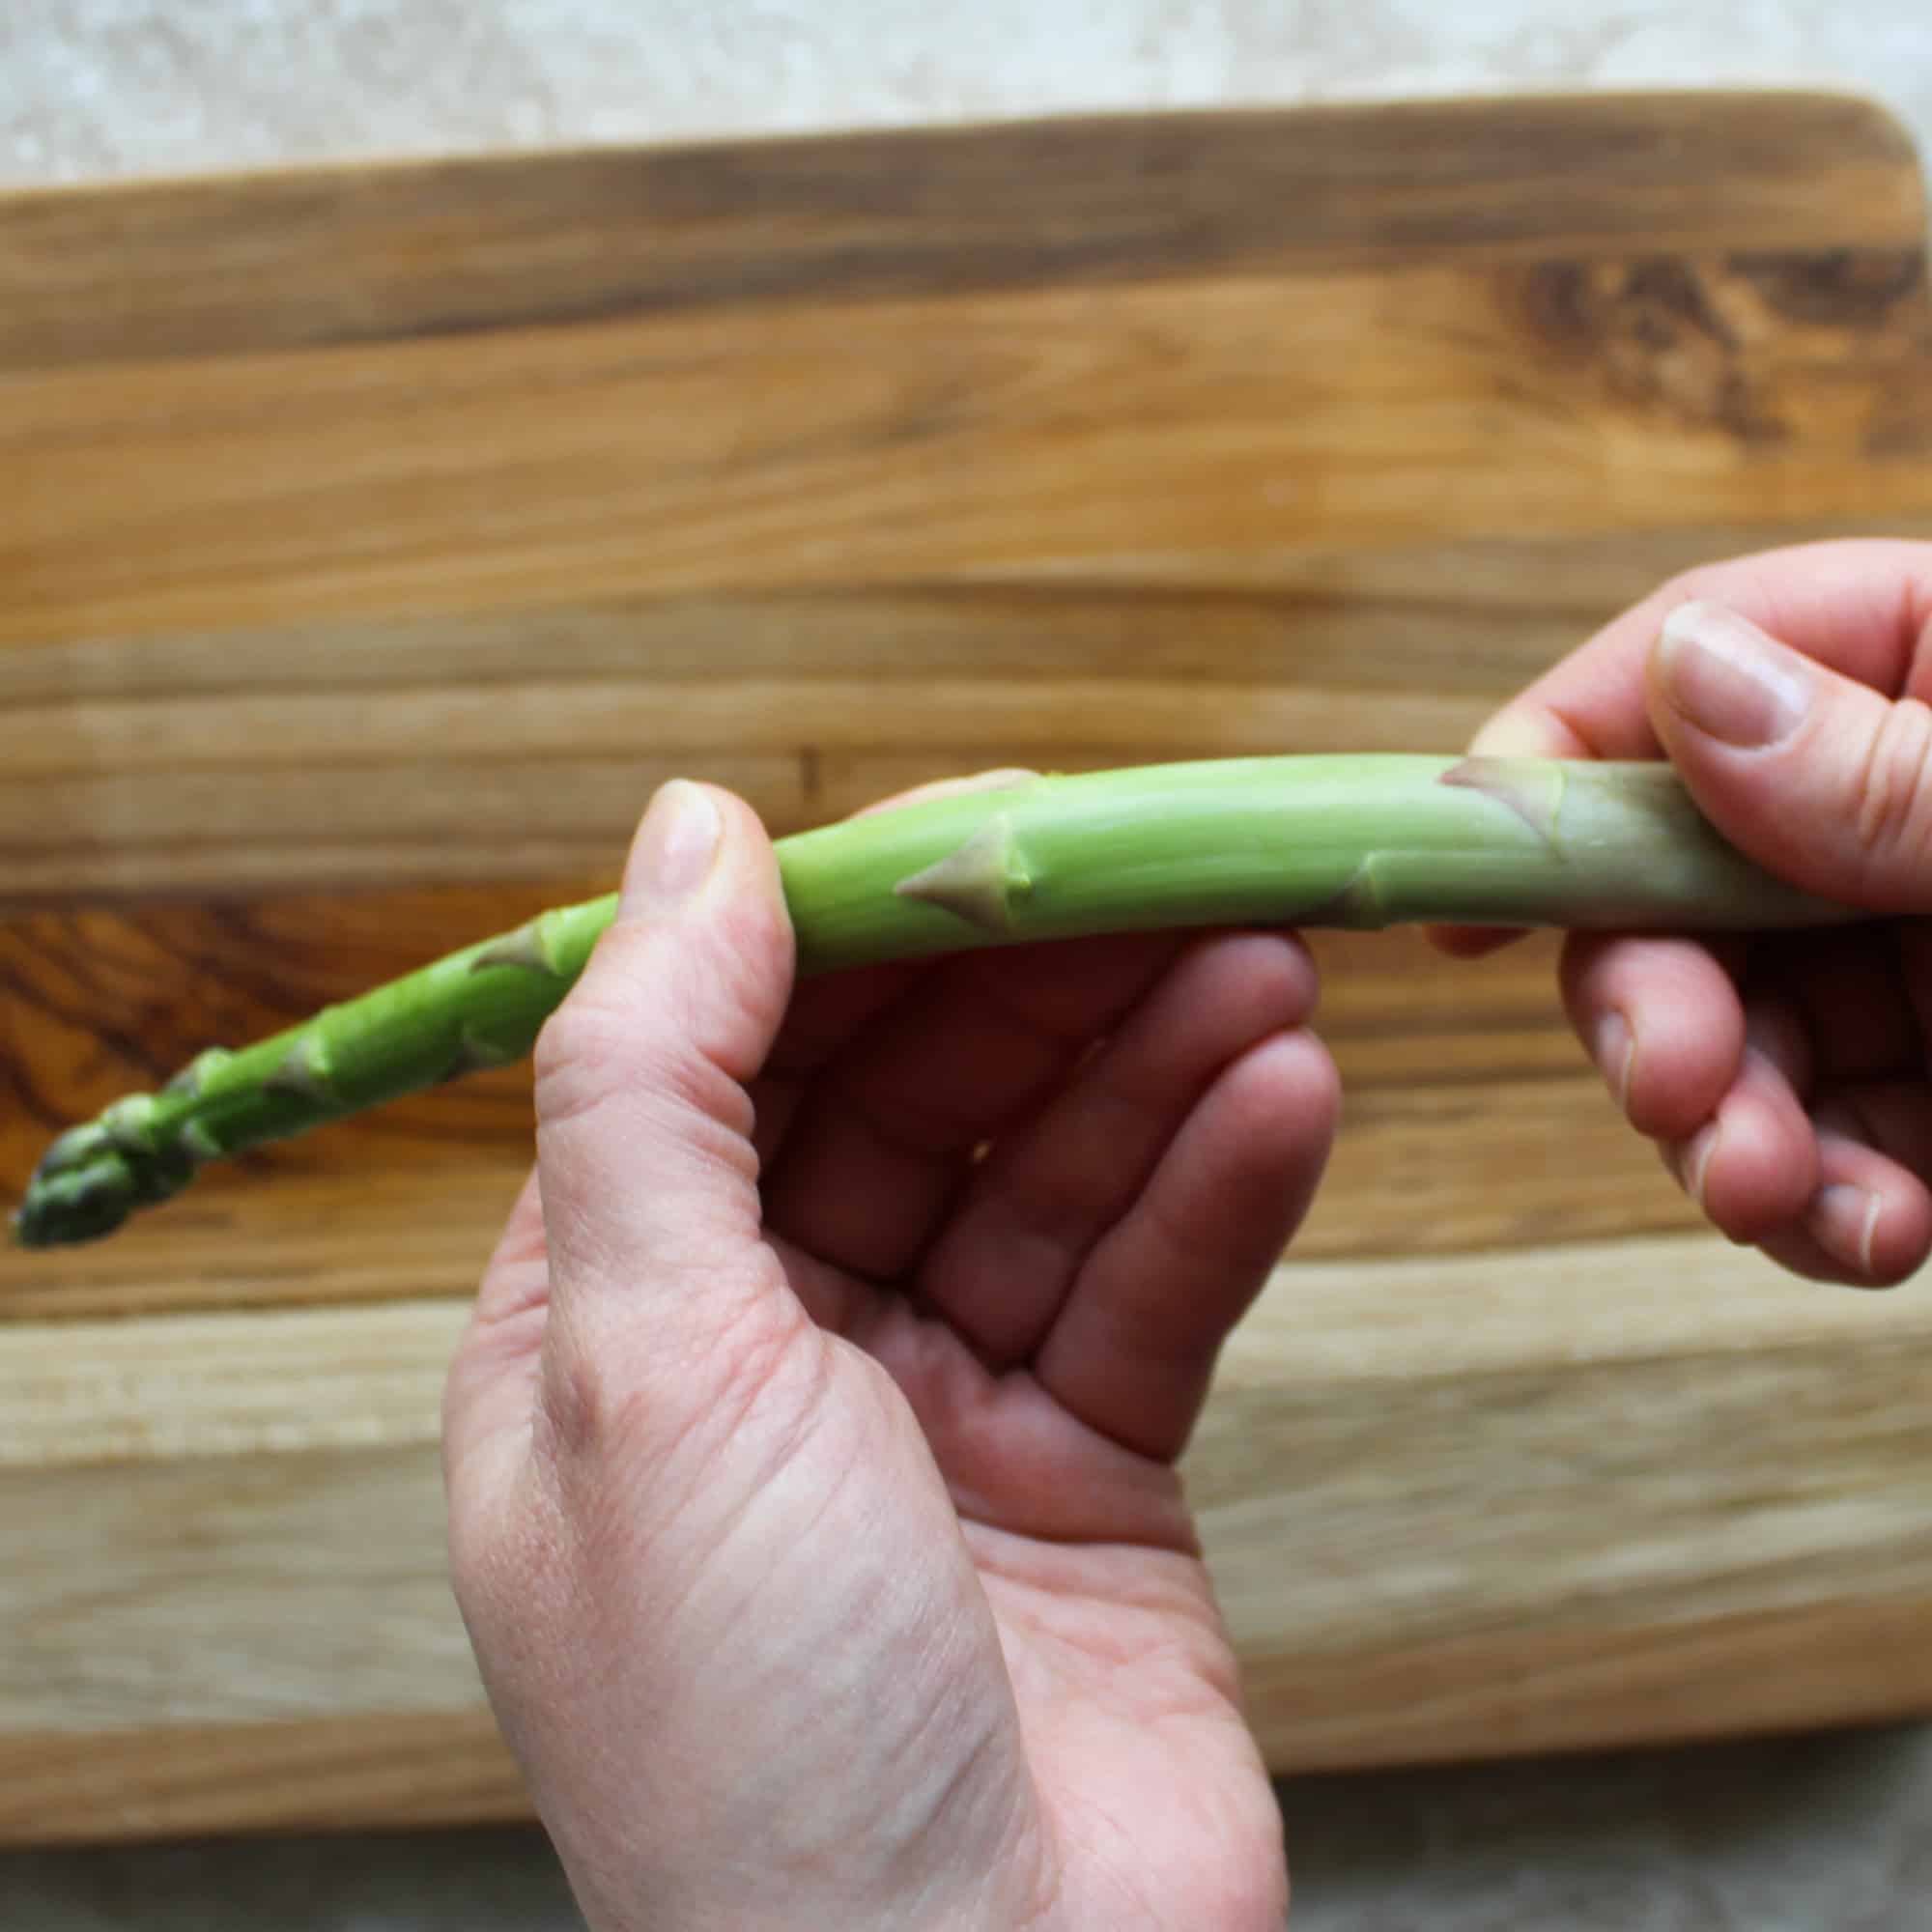 bend the asparagus